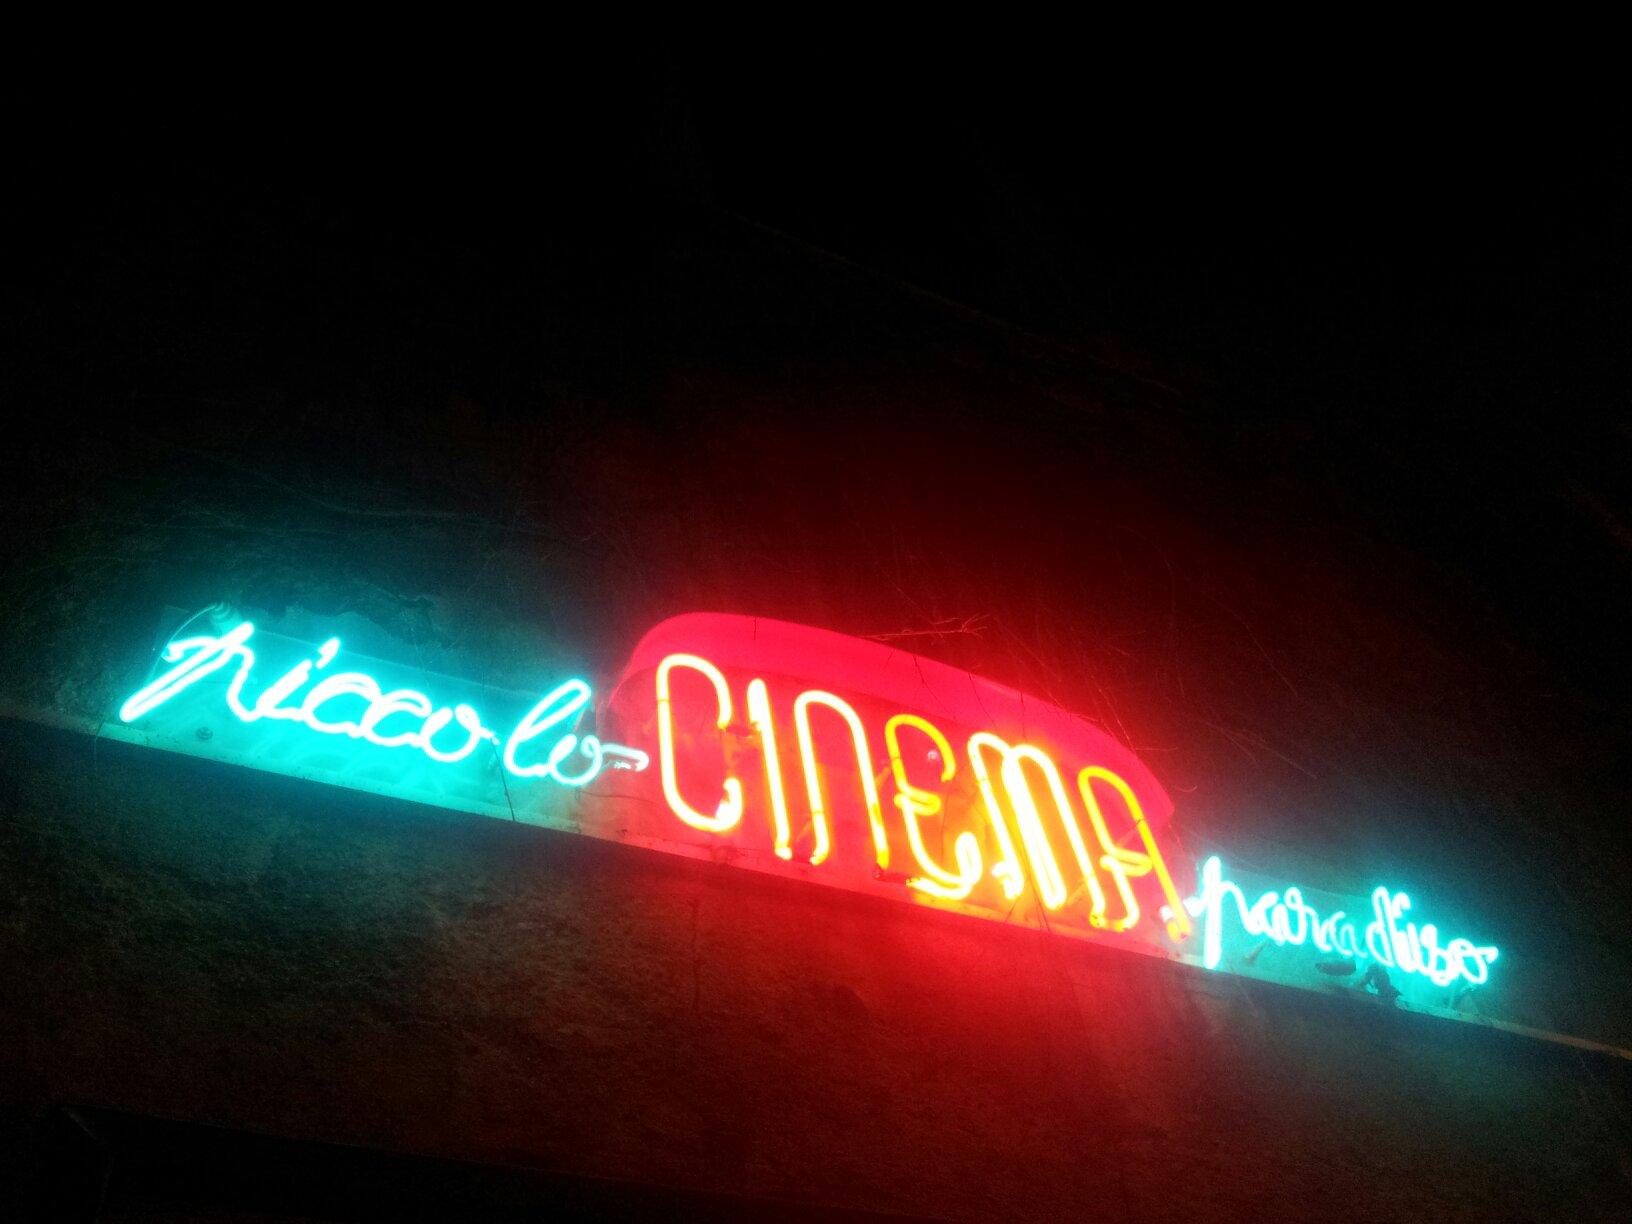 Piccolo Cinema Paradiso